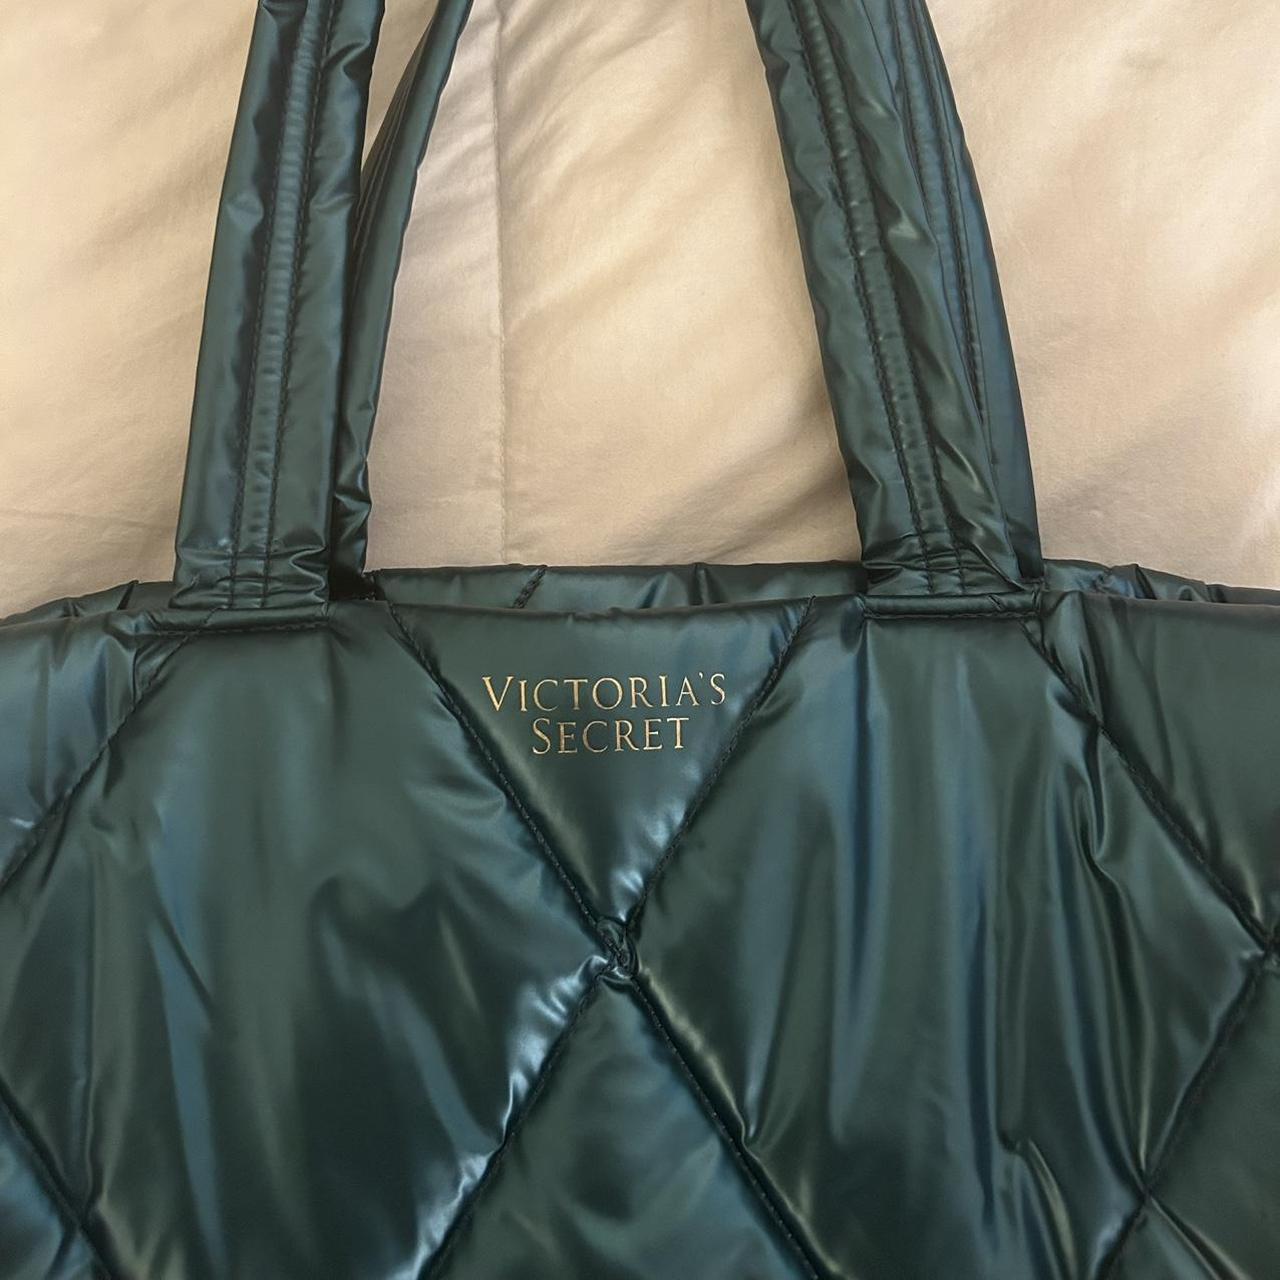 Victoria's Secret Tote Bag in overall good preloved - Depop